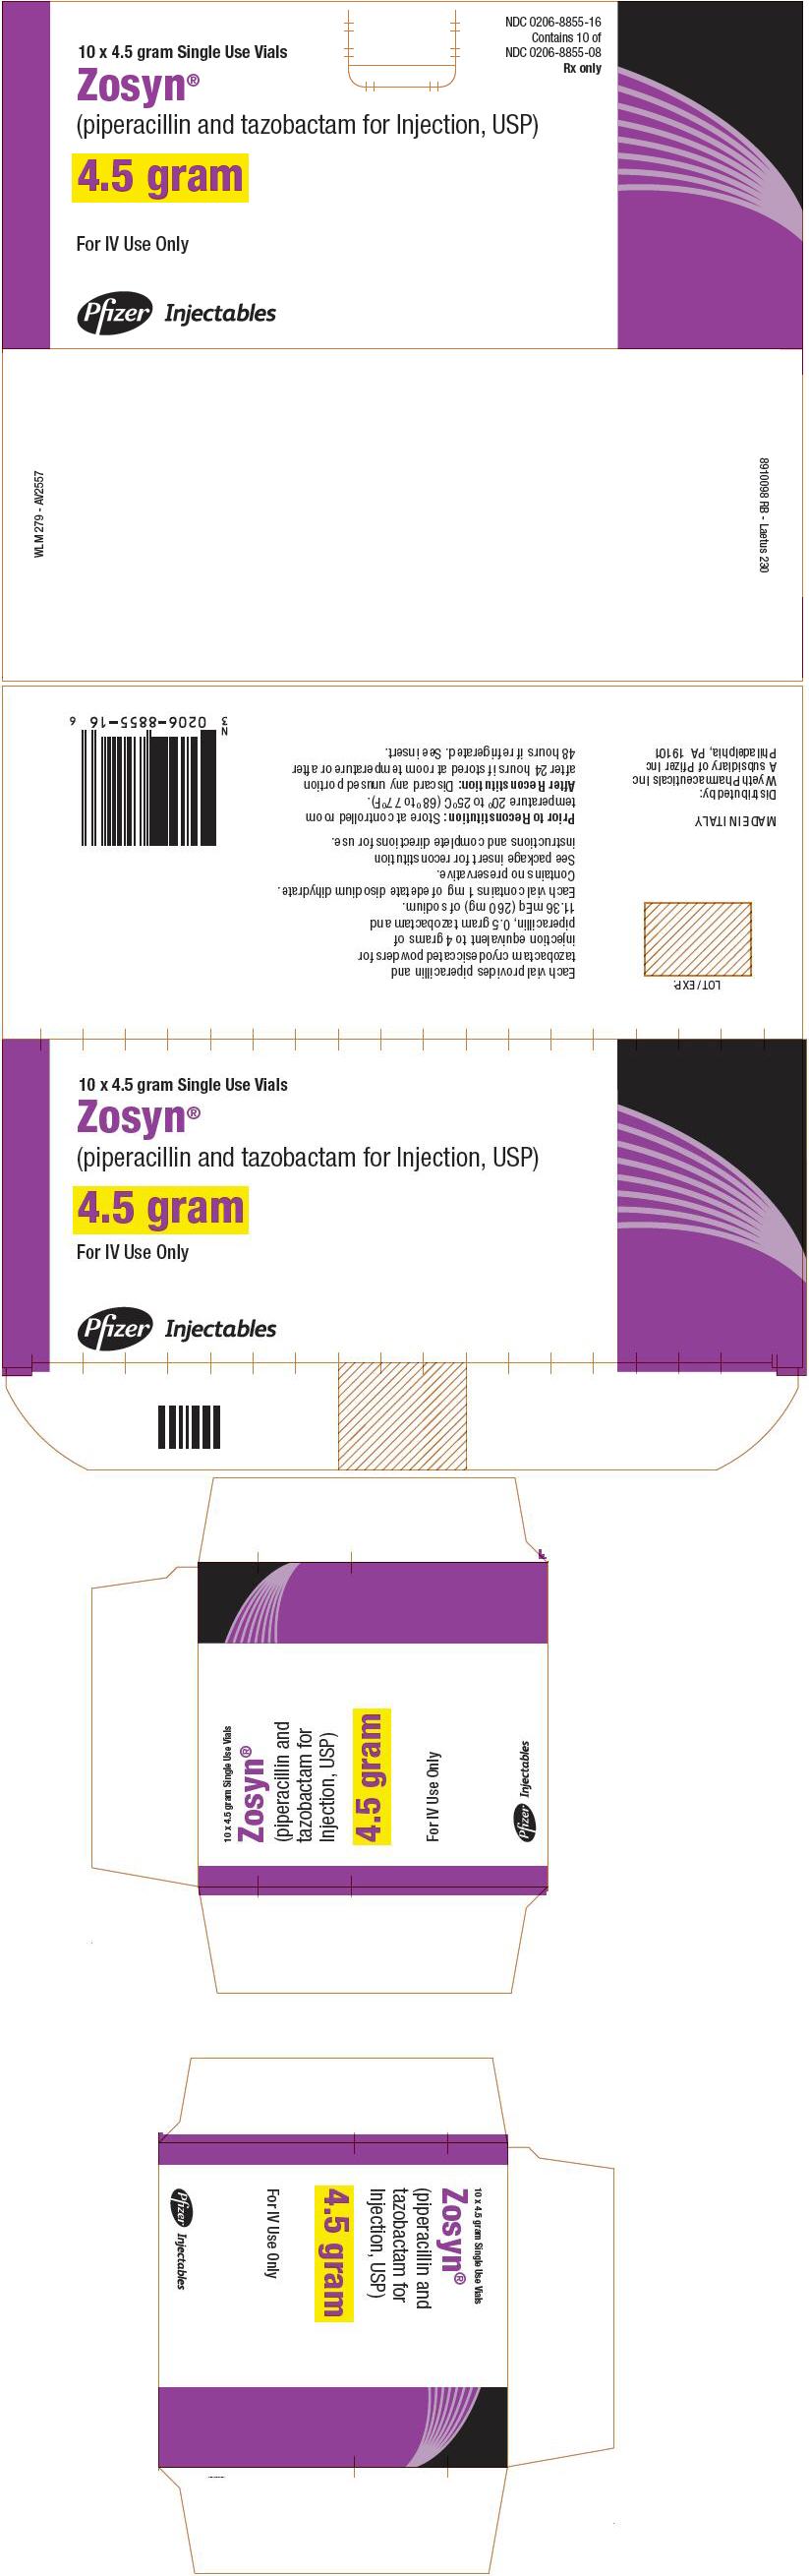 PRINCIPAL DISPLAY PANEL - 4.5 gram Vial Carton